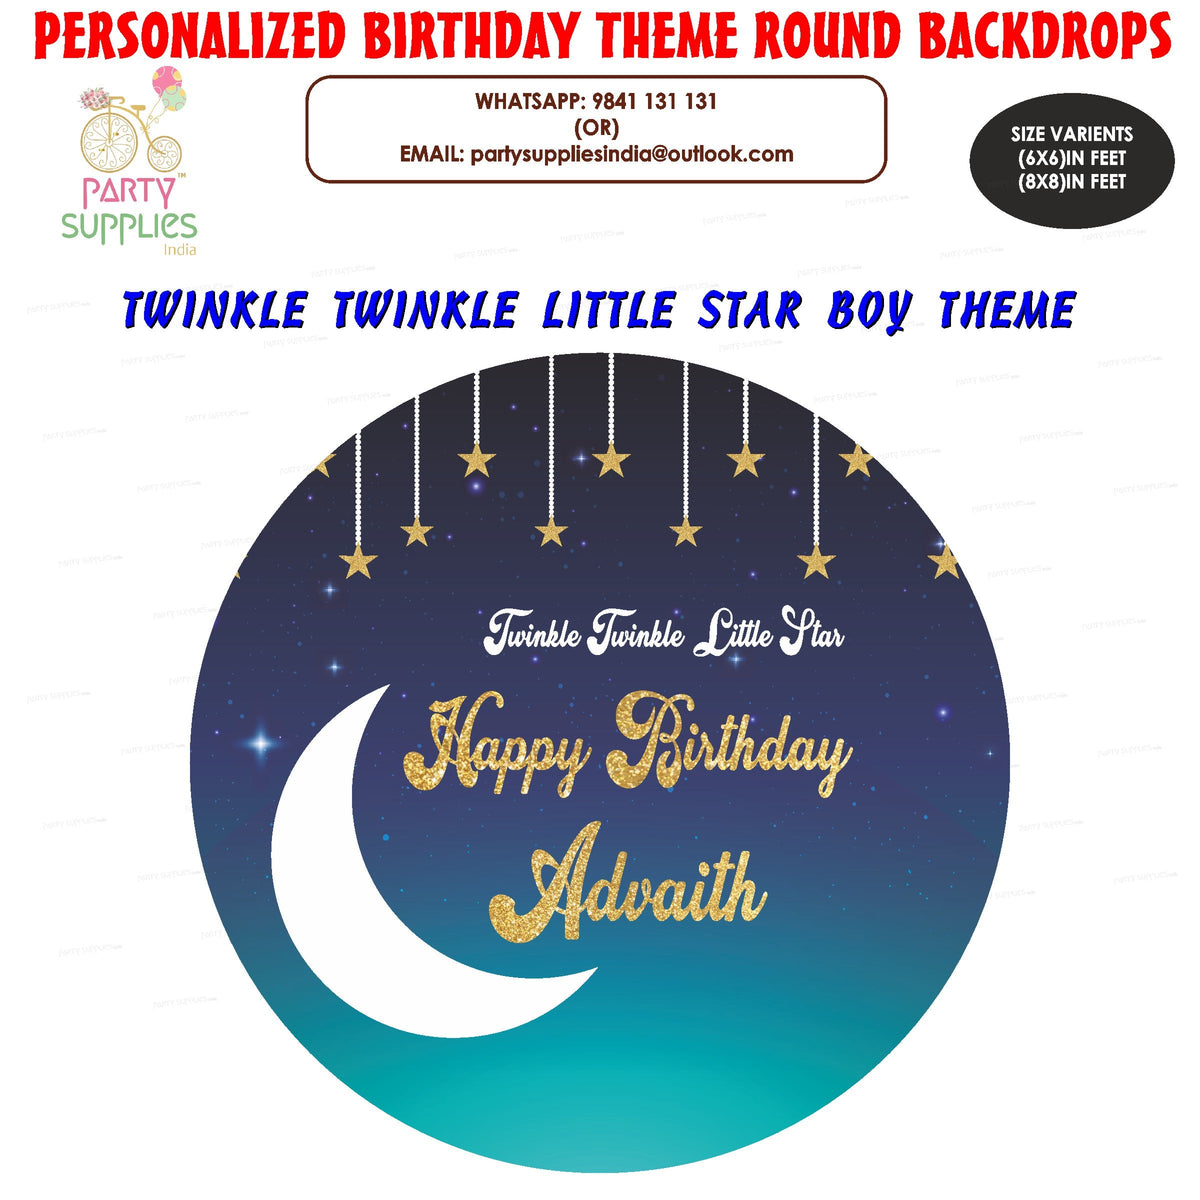 PSI Twinkle Twinkle Little Star Boy Theme Personalized Round Backdrop